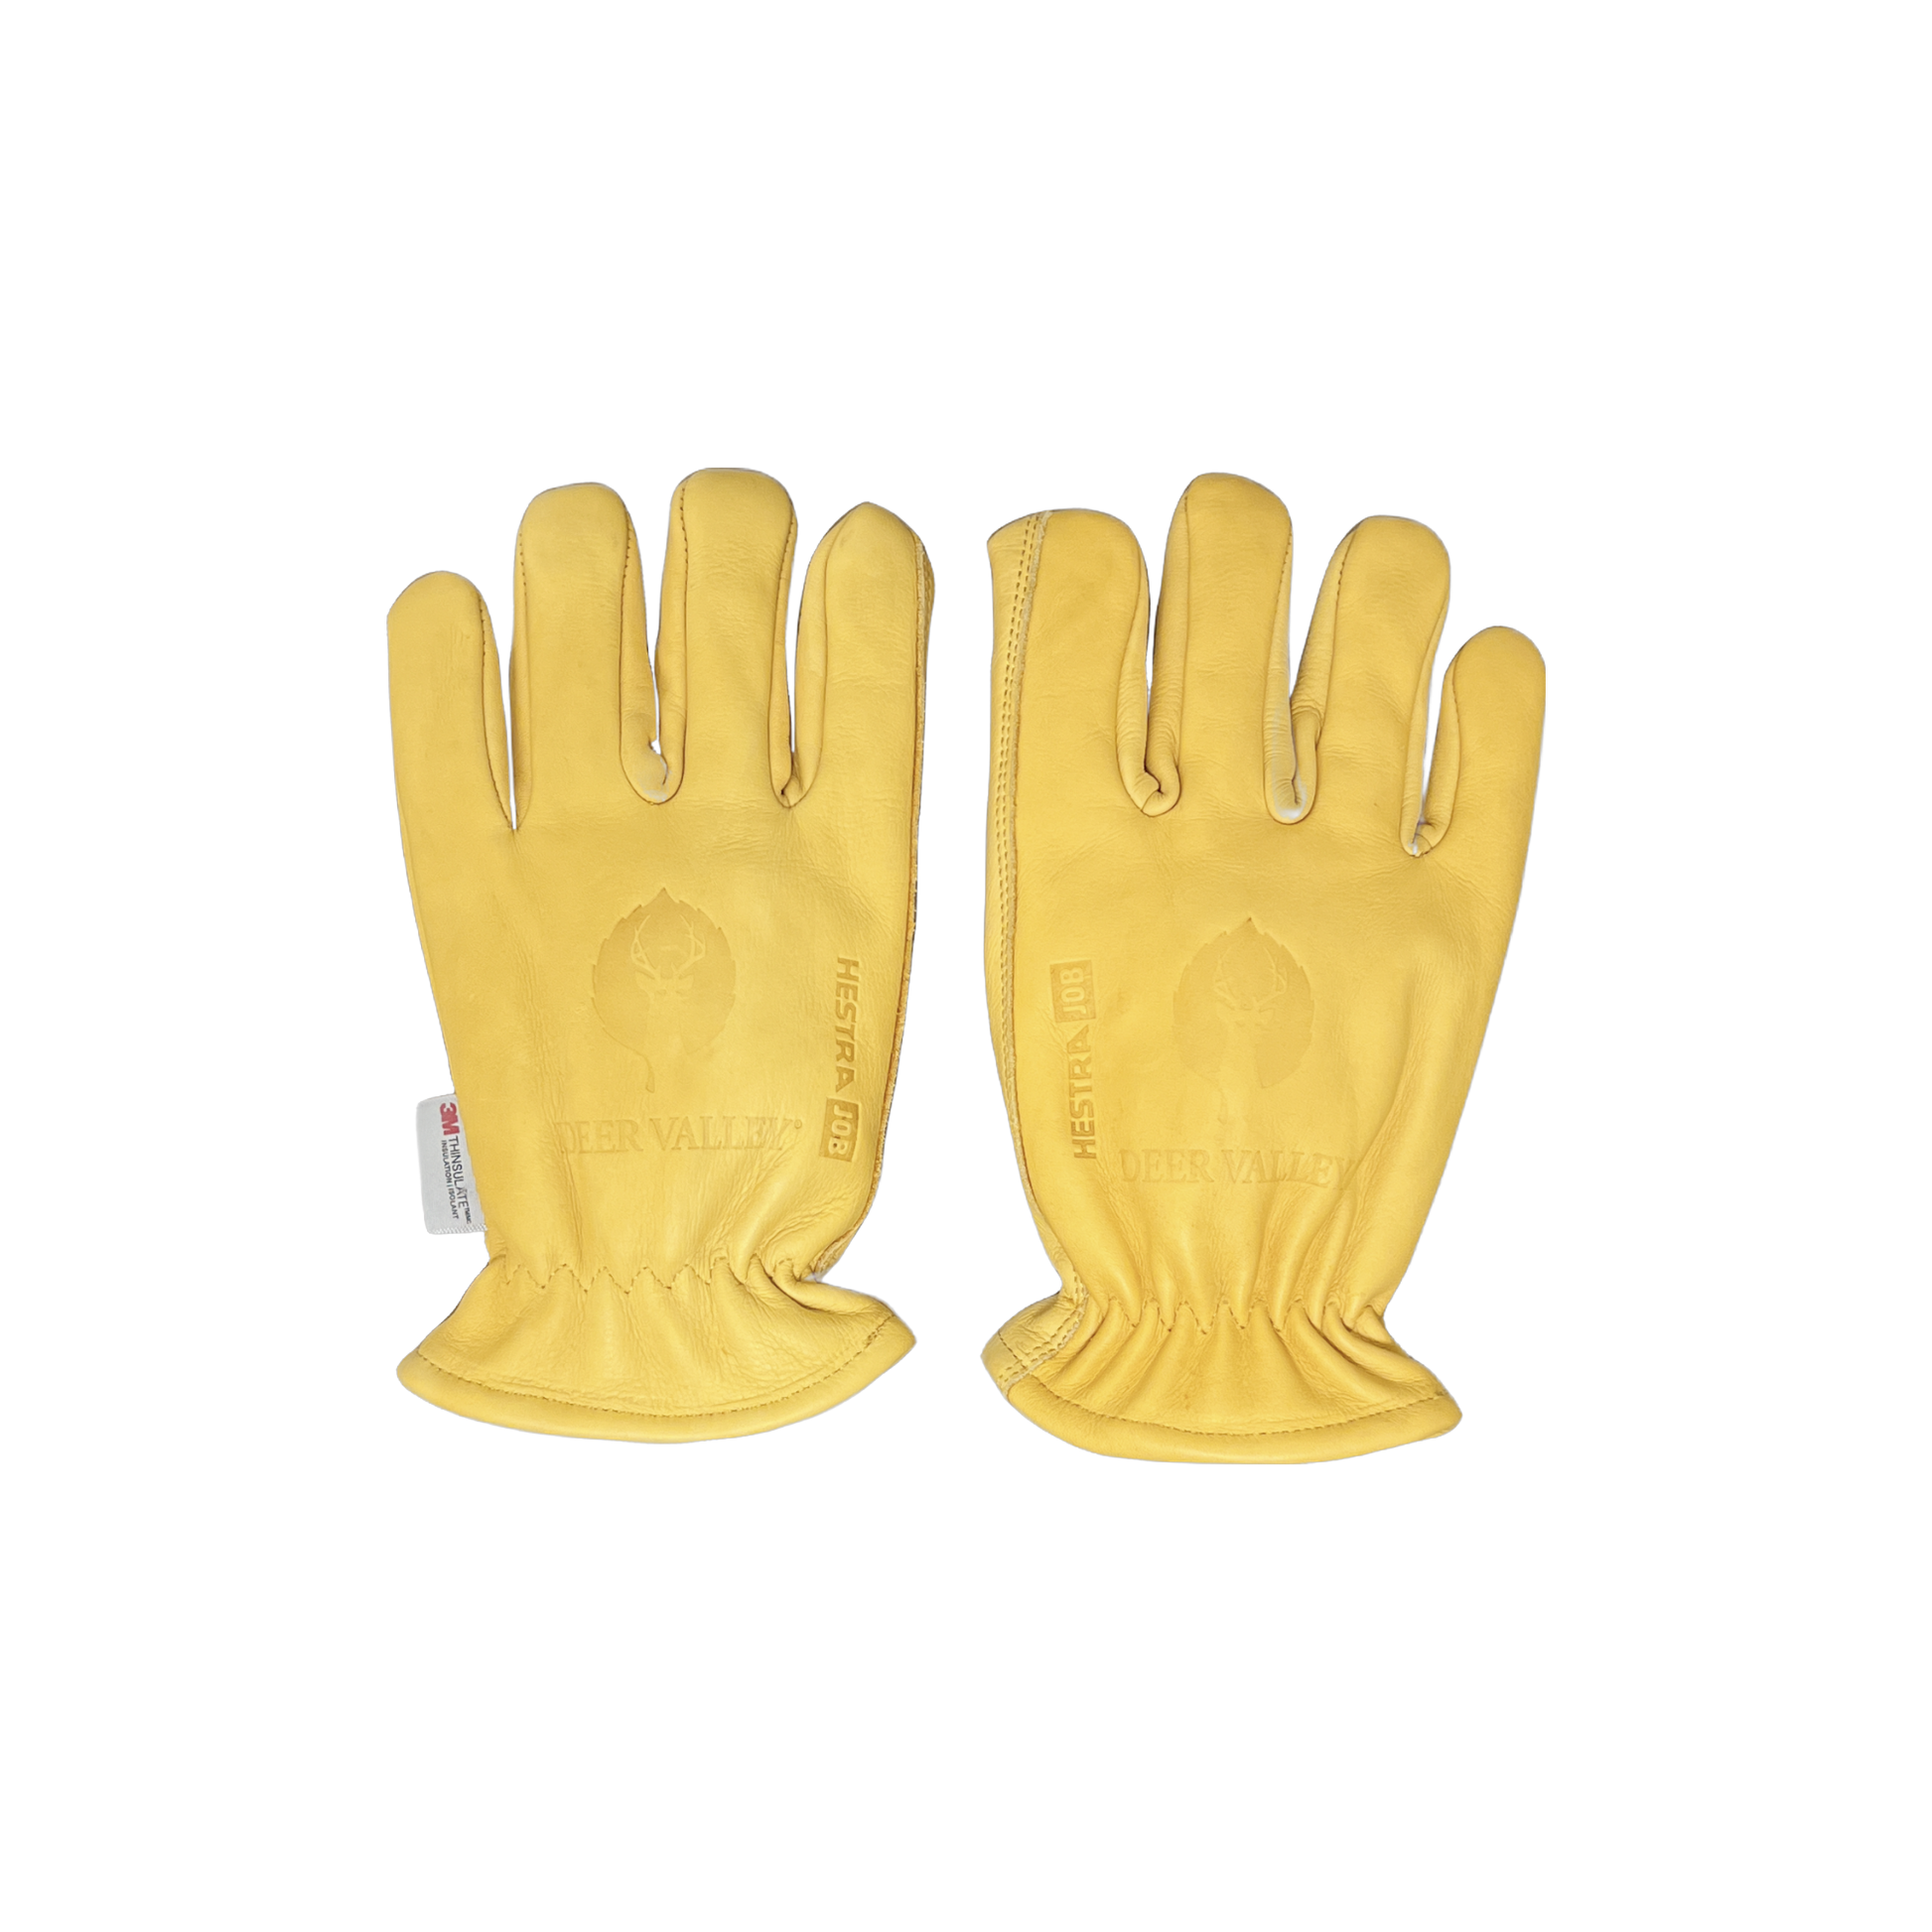 Hestra driver gloves with deer valley logo